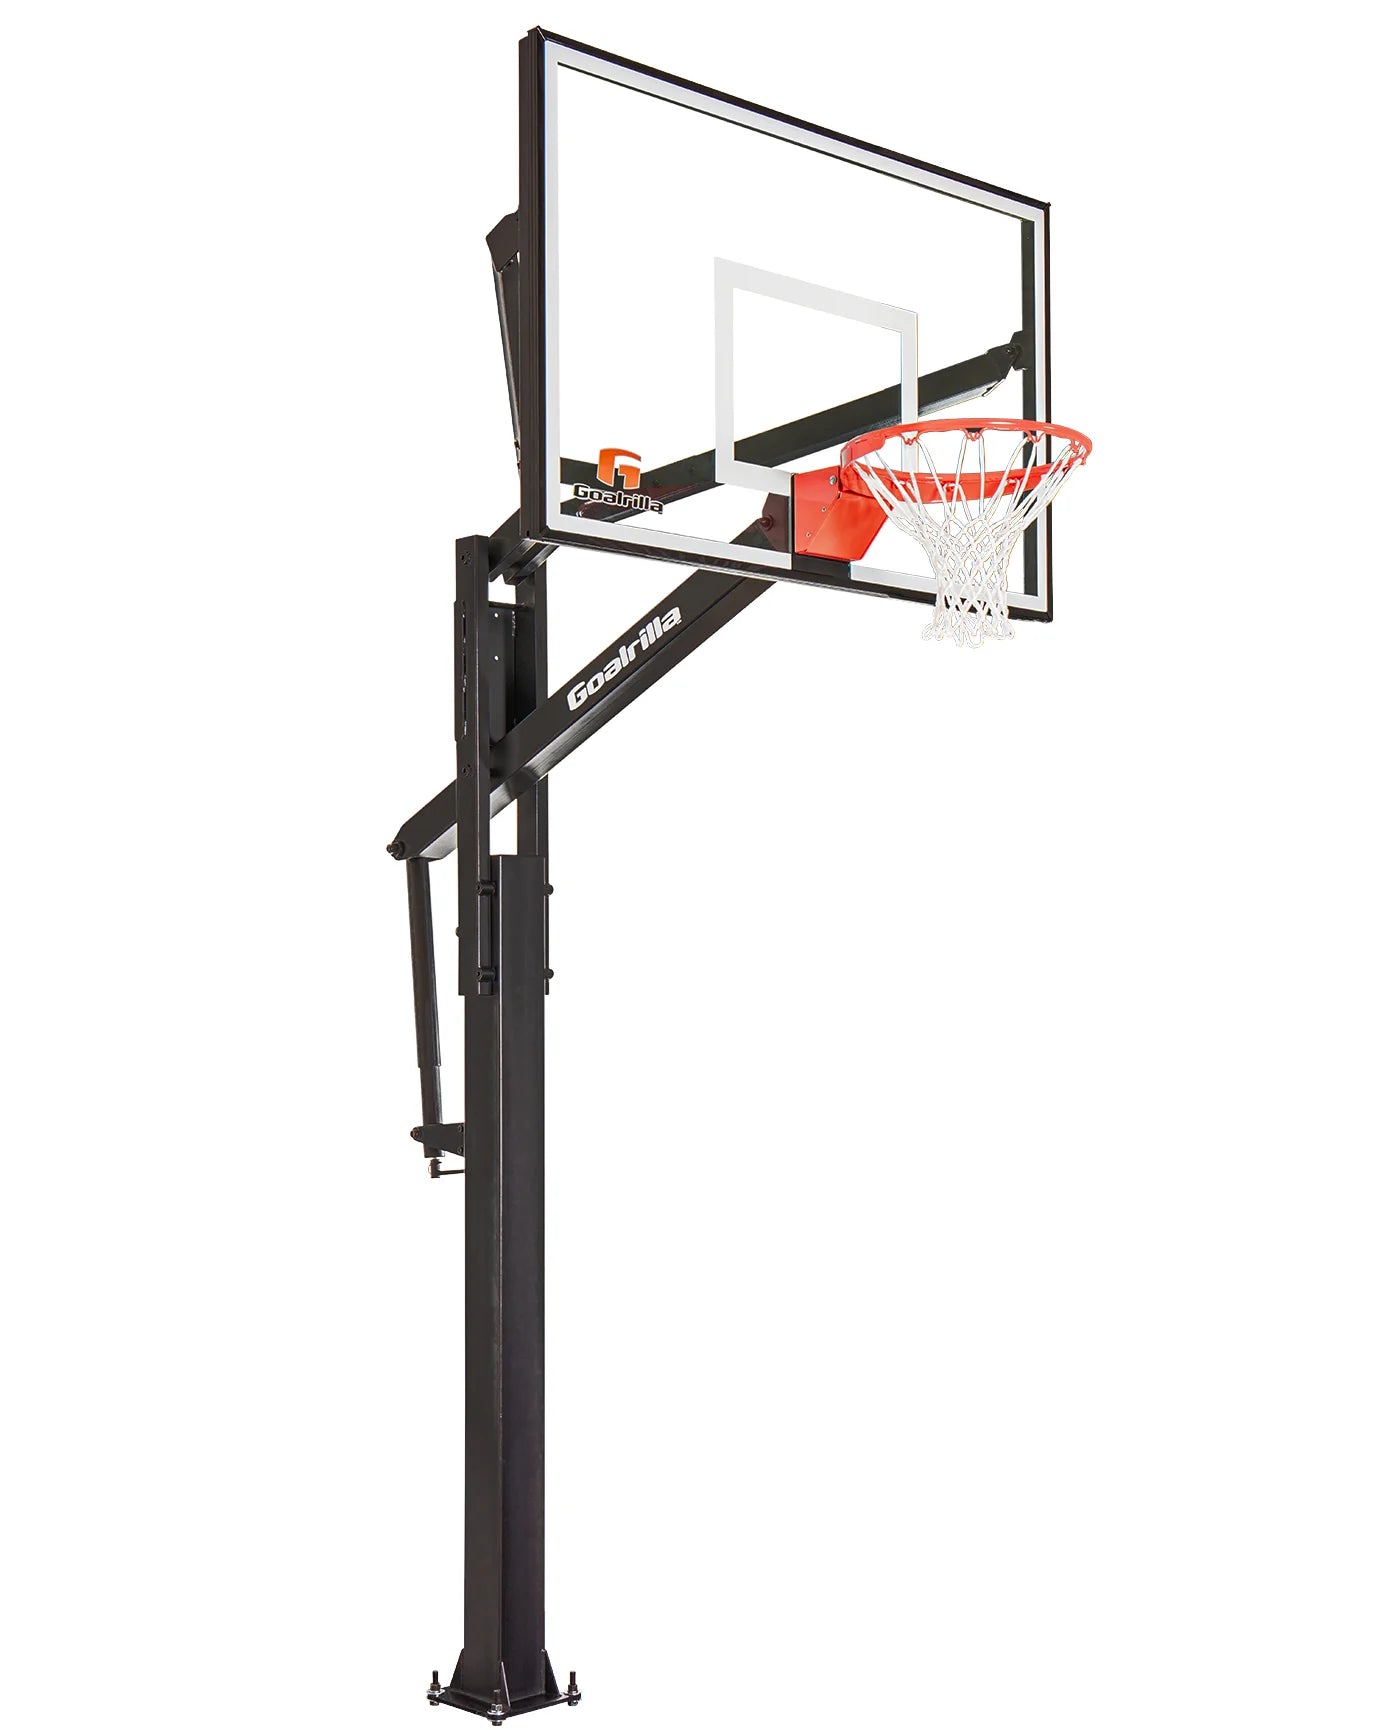 Goalrilla FT60 In-Ground Basketball Hoop System